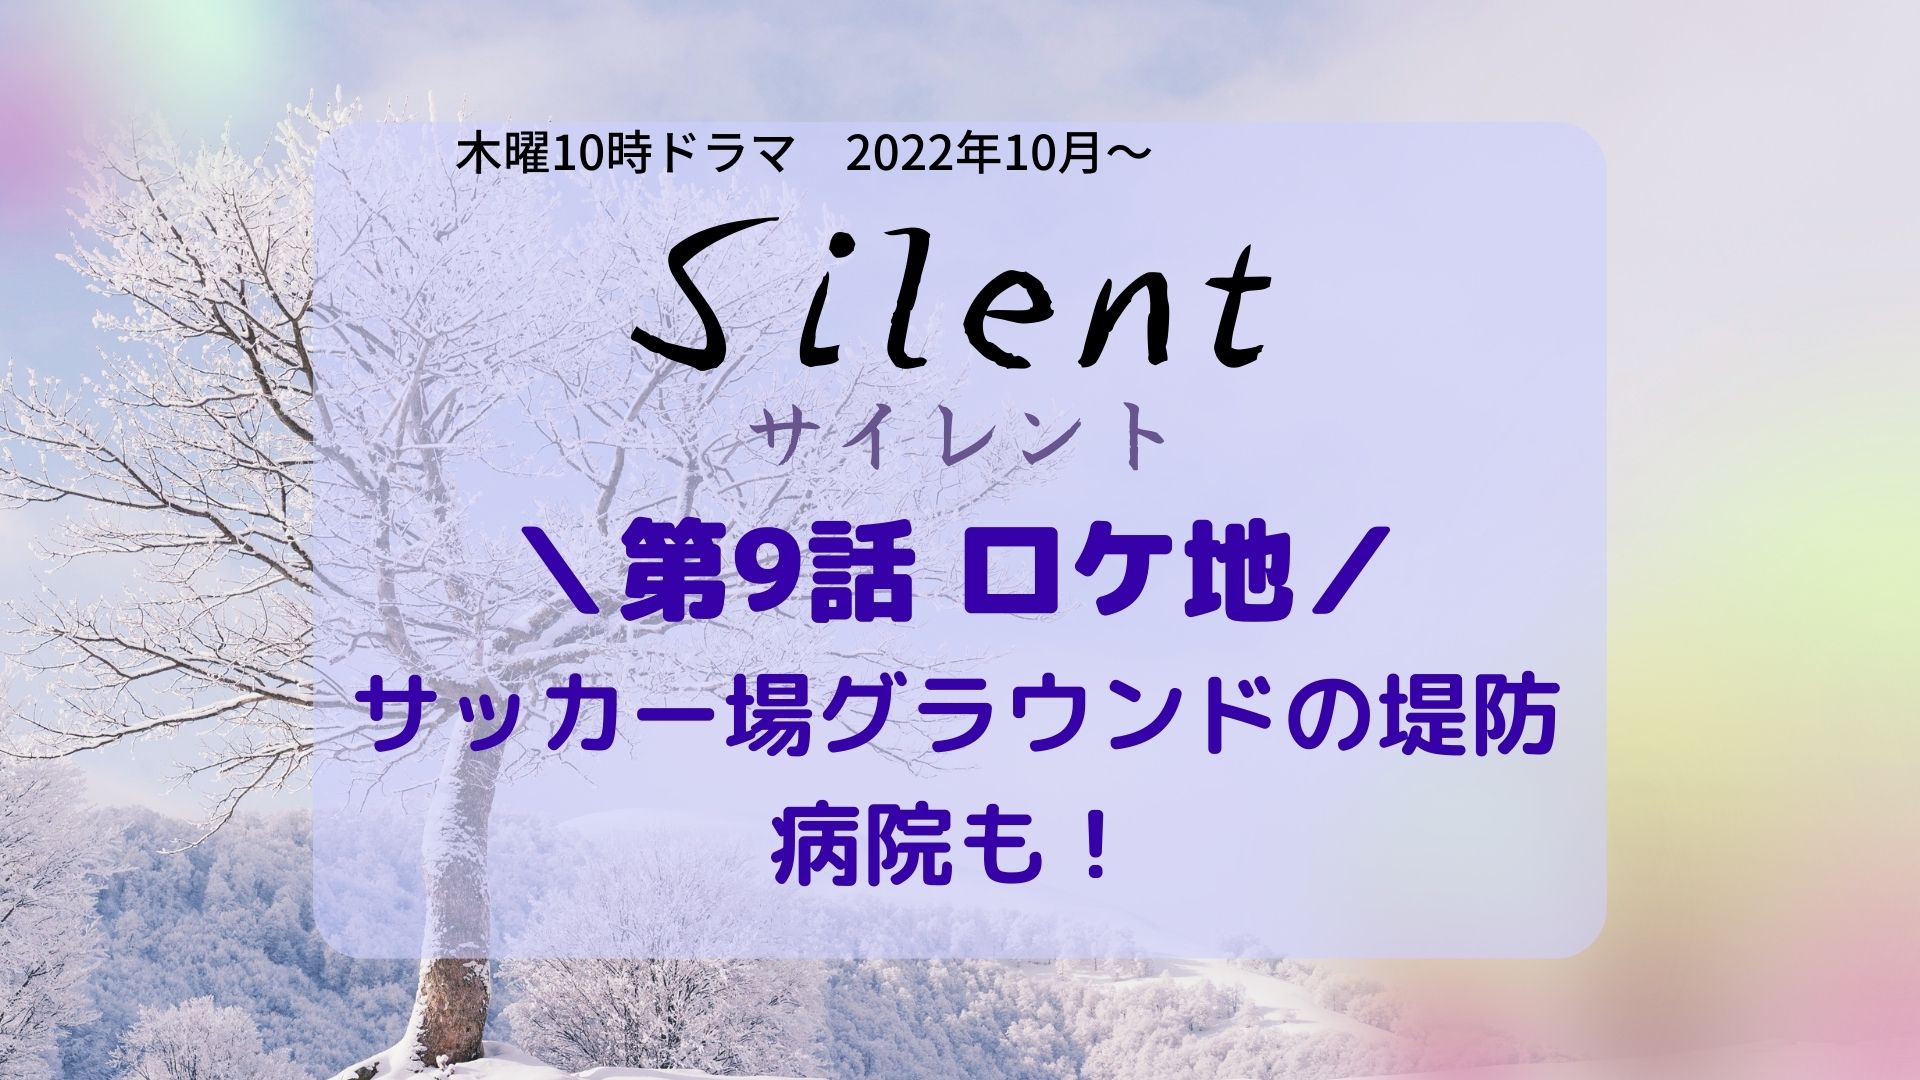 Silent (サイレント)9話ロケ地